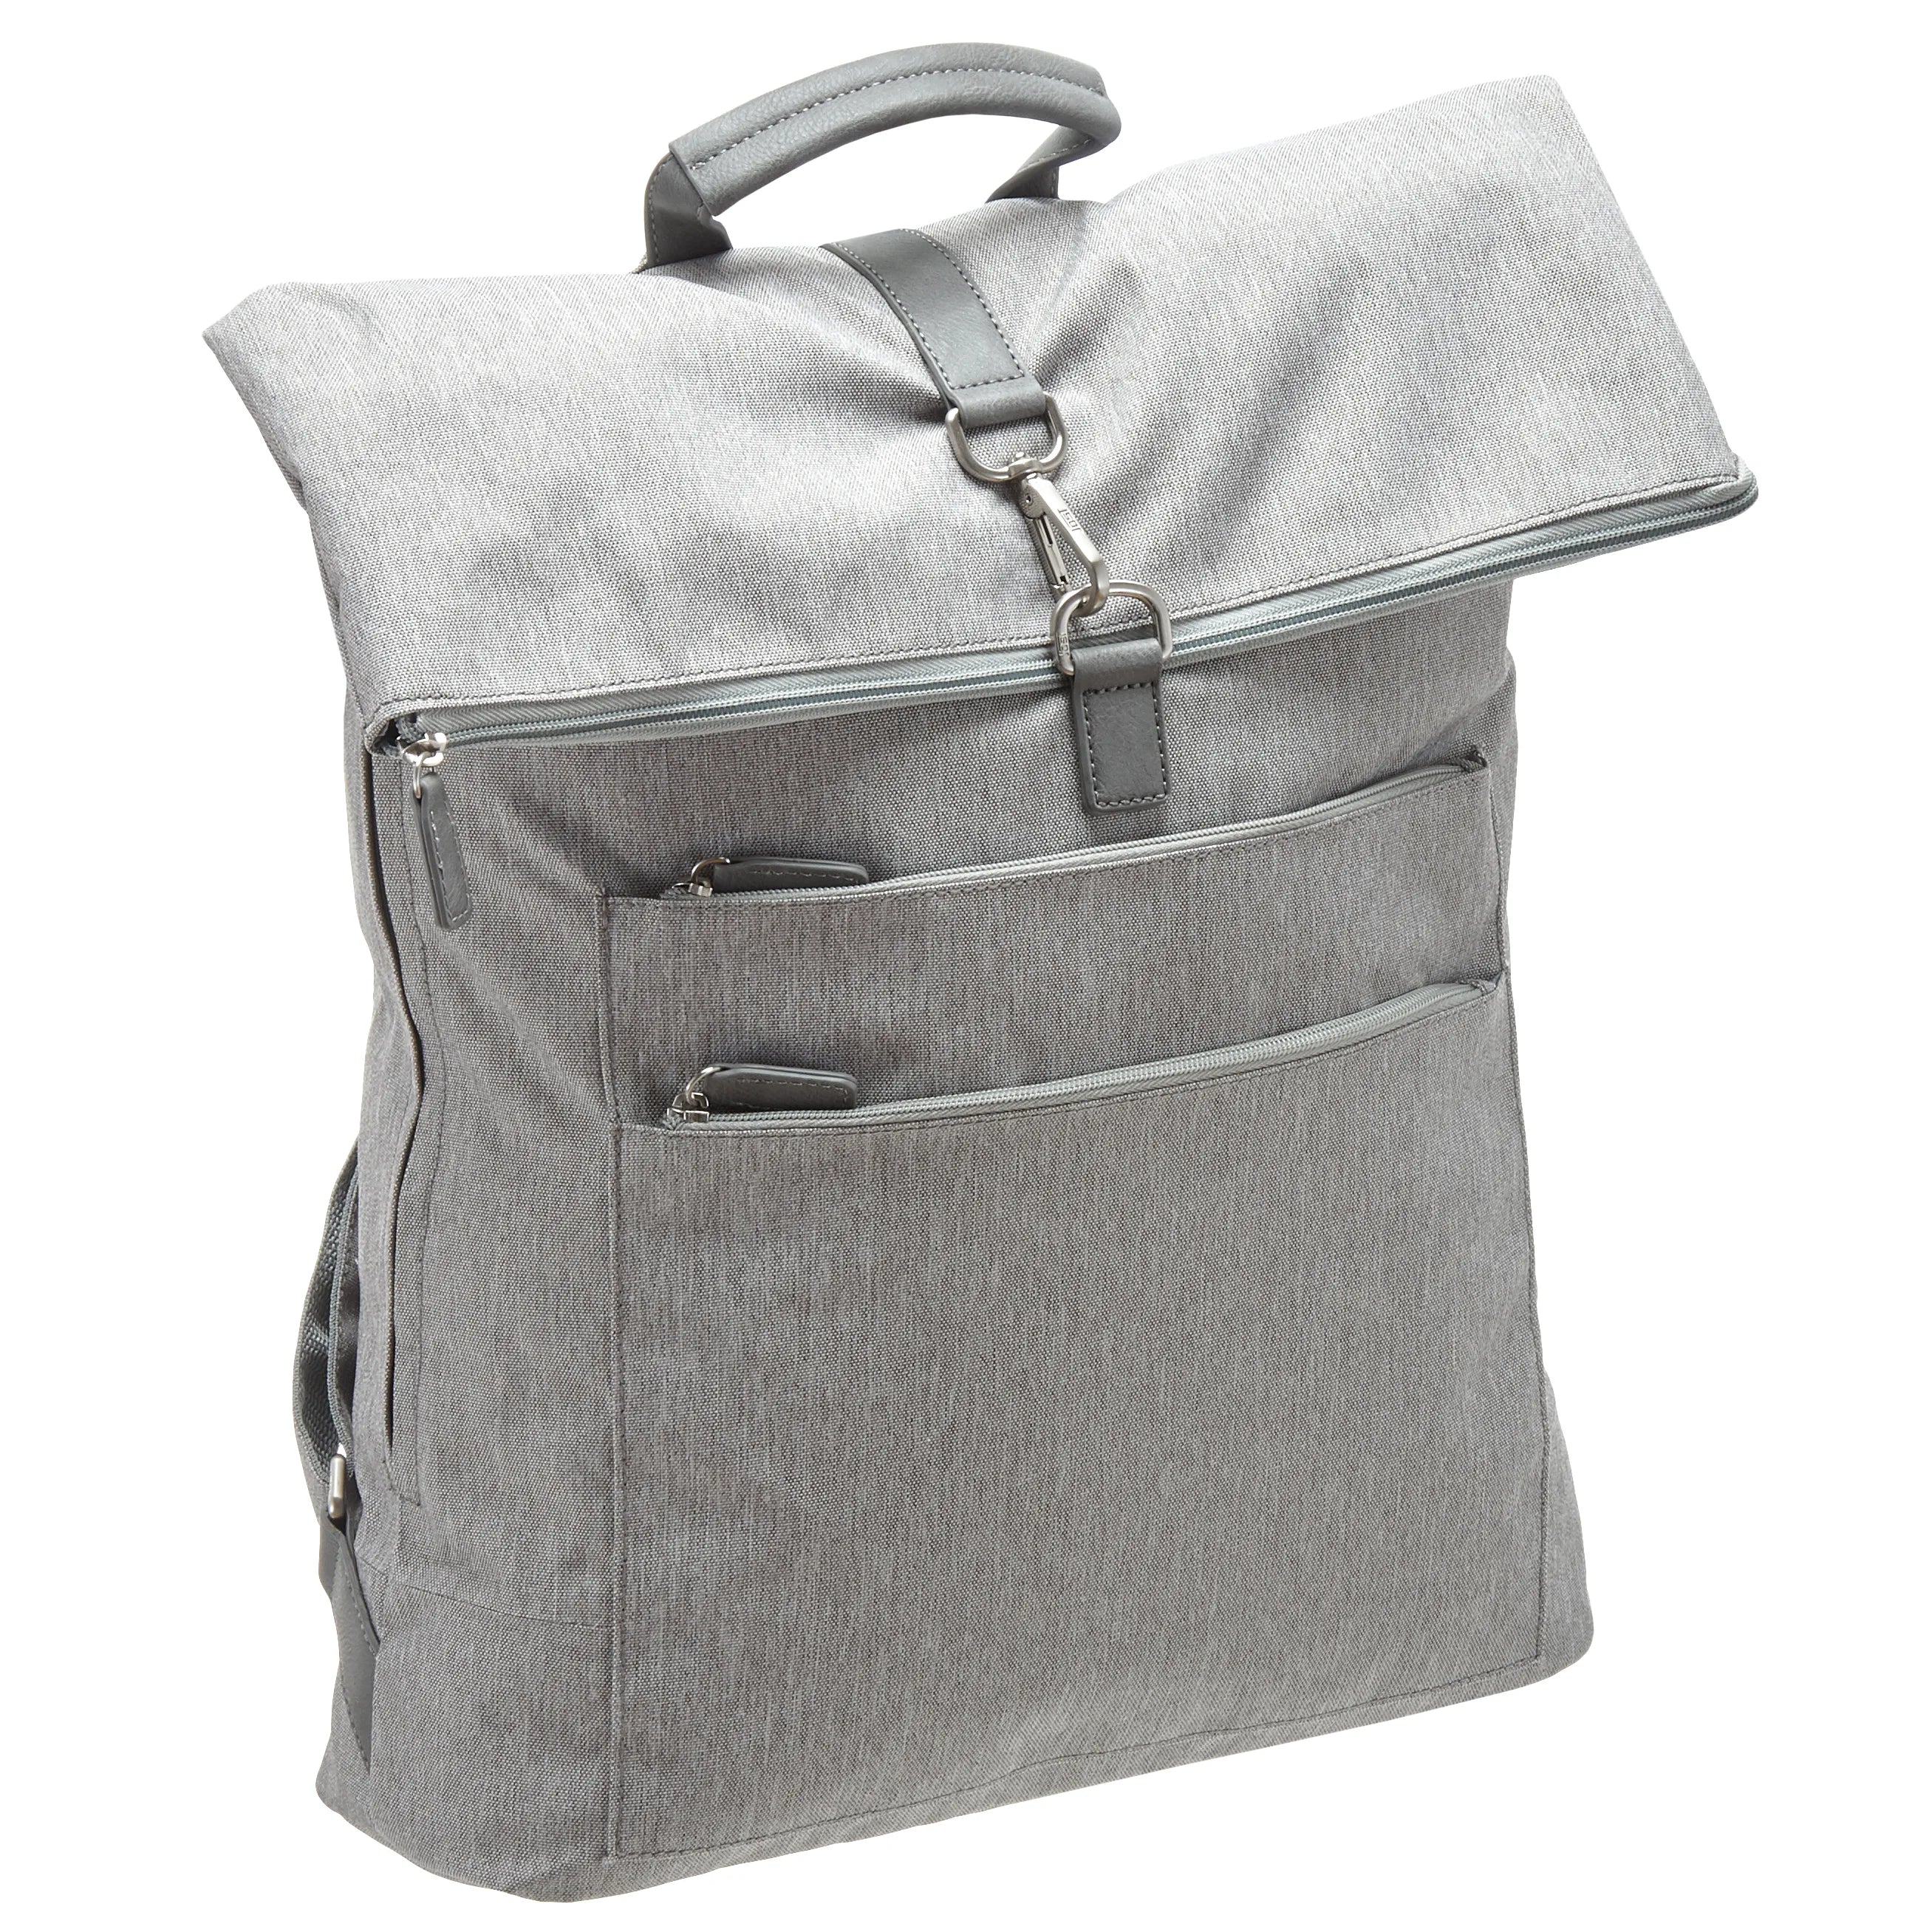 Jost Bergen courier backpack 46 cm - light gray